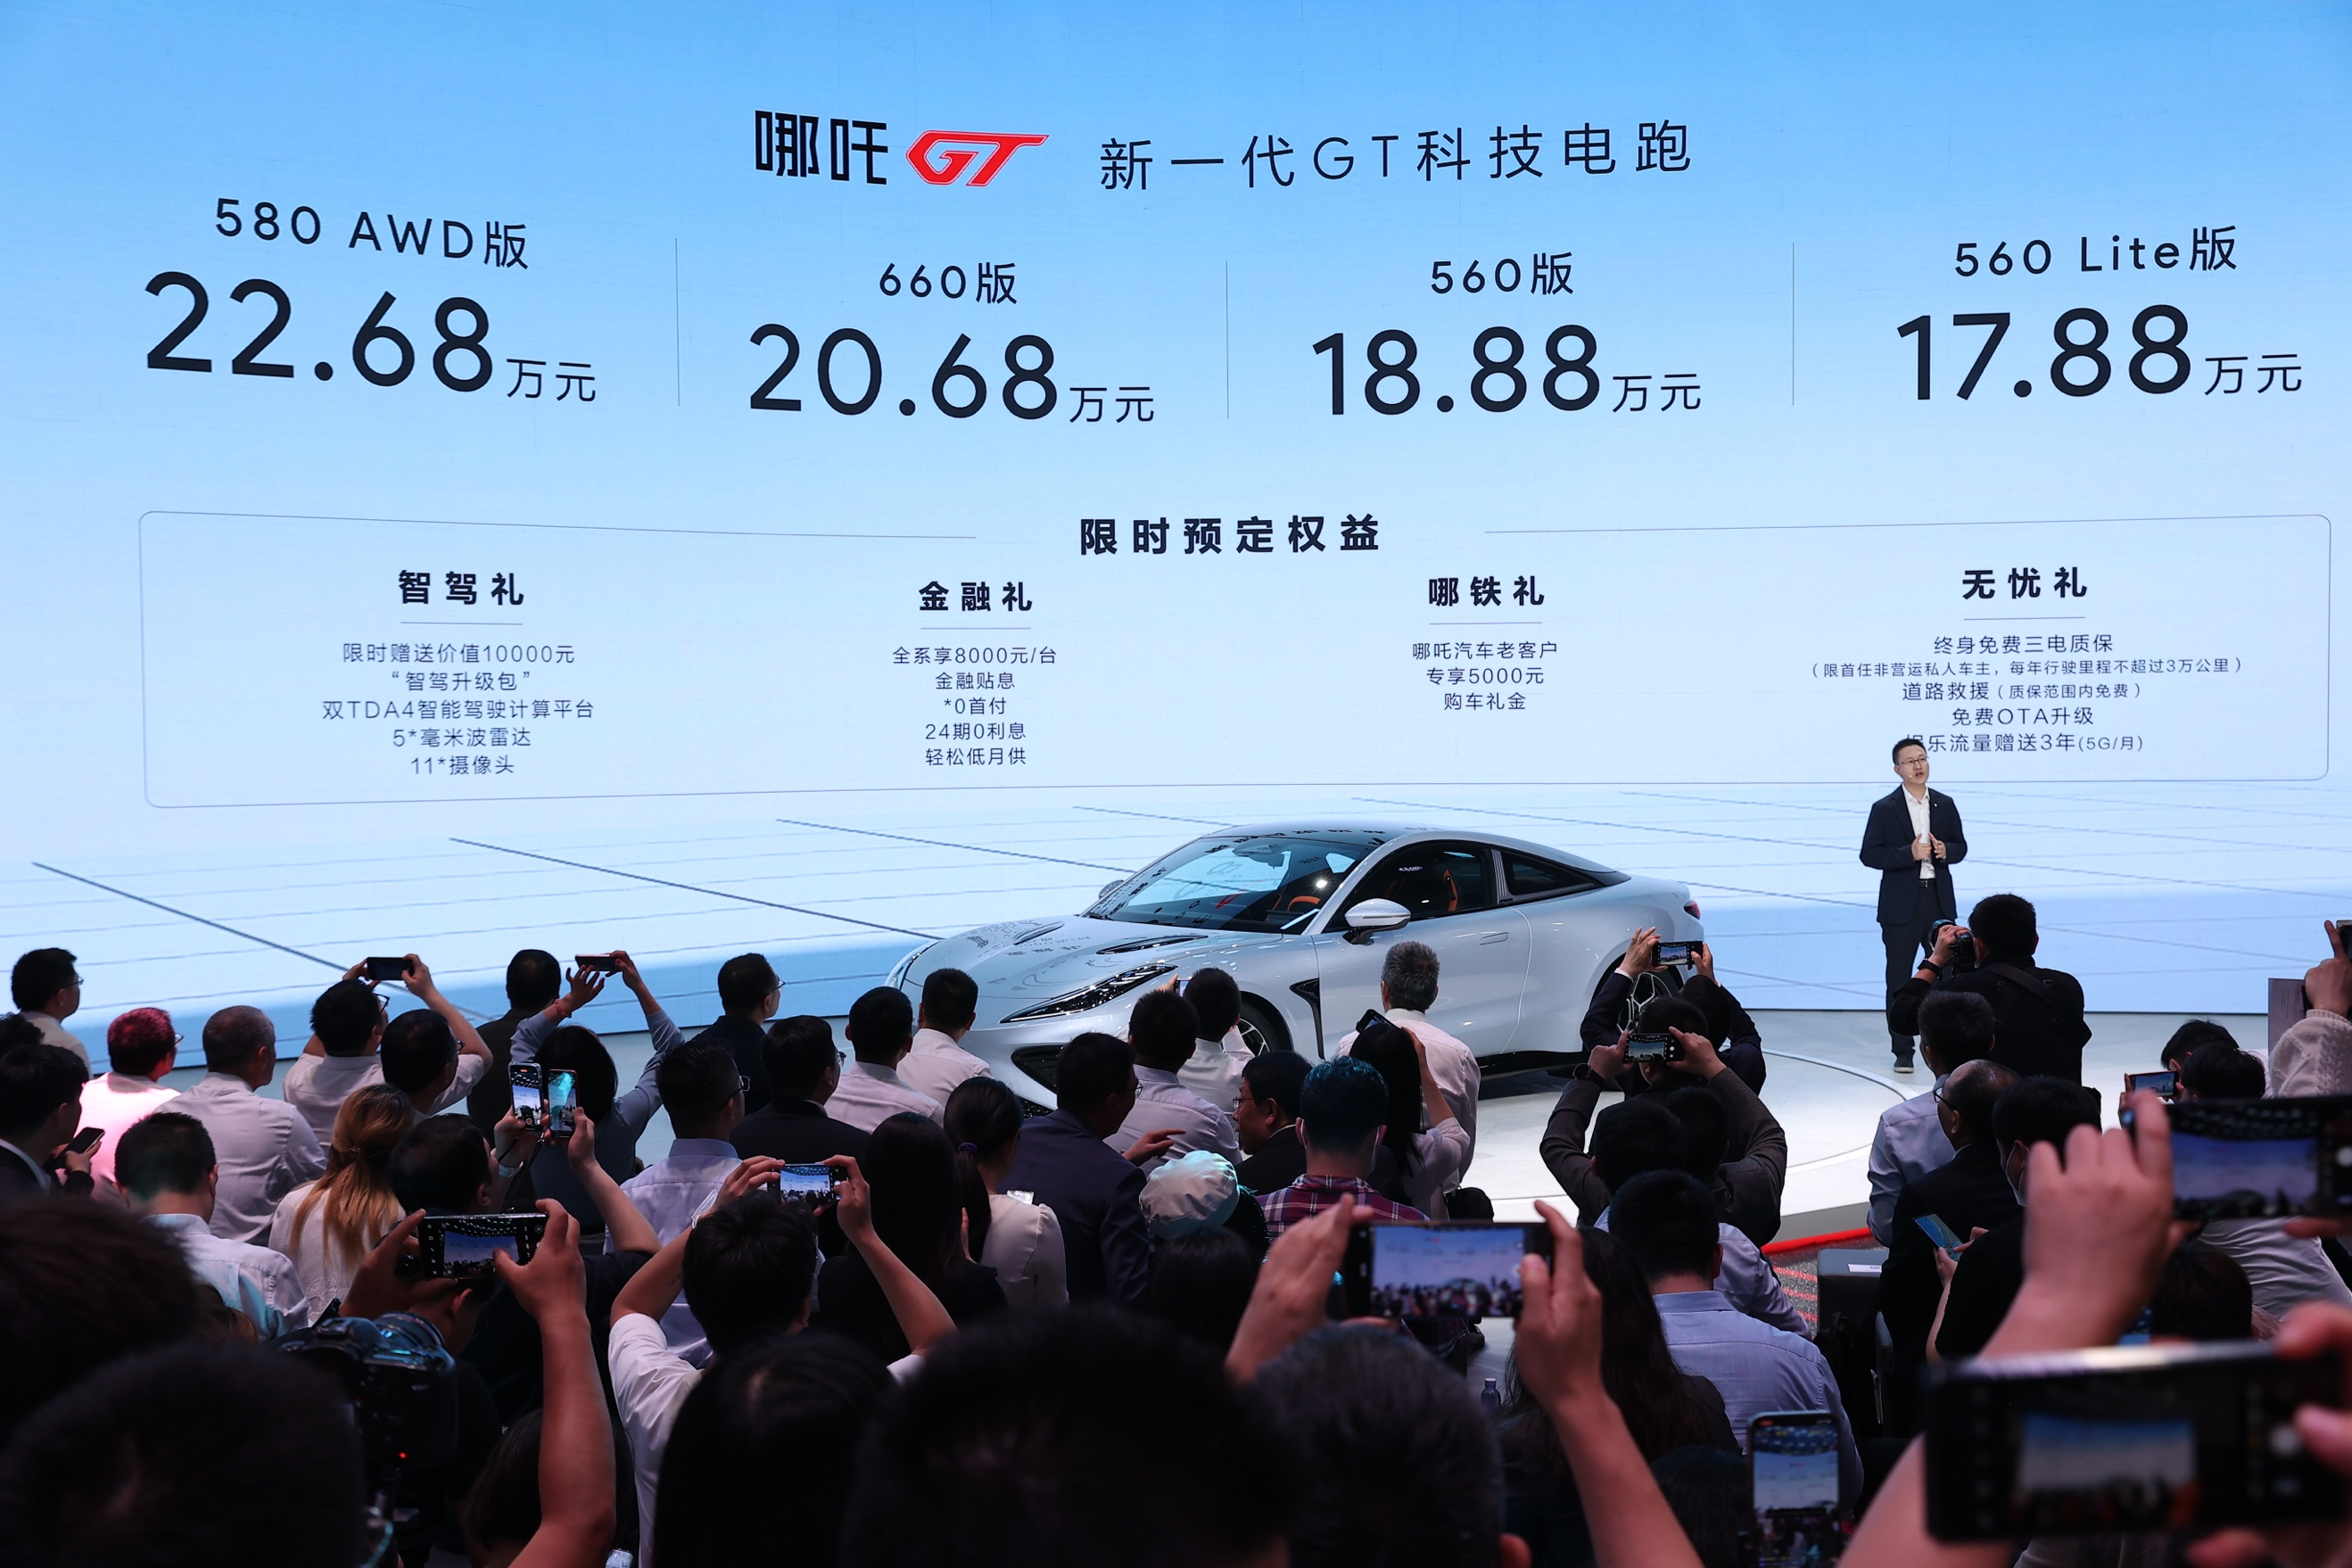 NIO's subsidiary, NIO NextEV's Latest Electric Sports Car - The NIO GT, Launched at Auto Shanghai 2021